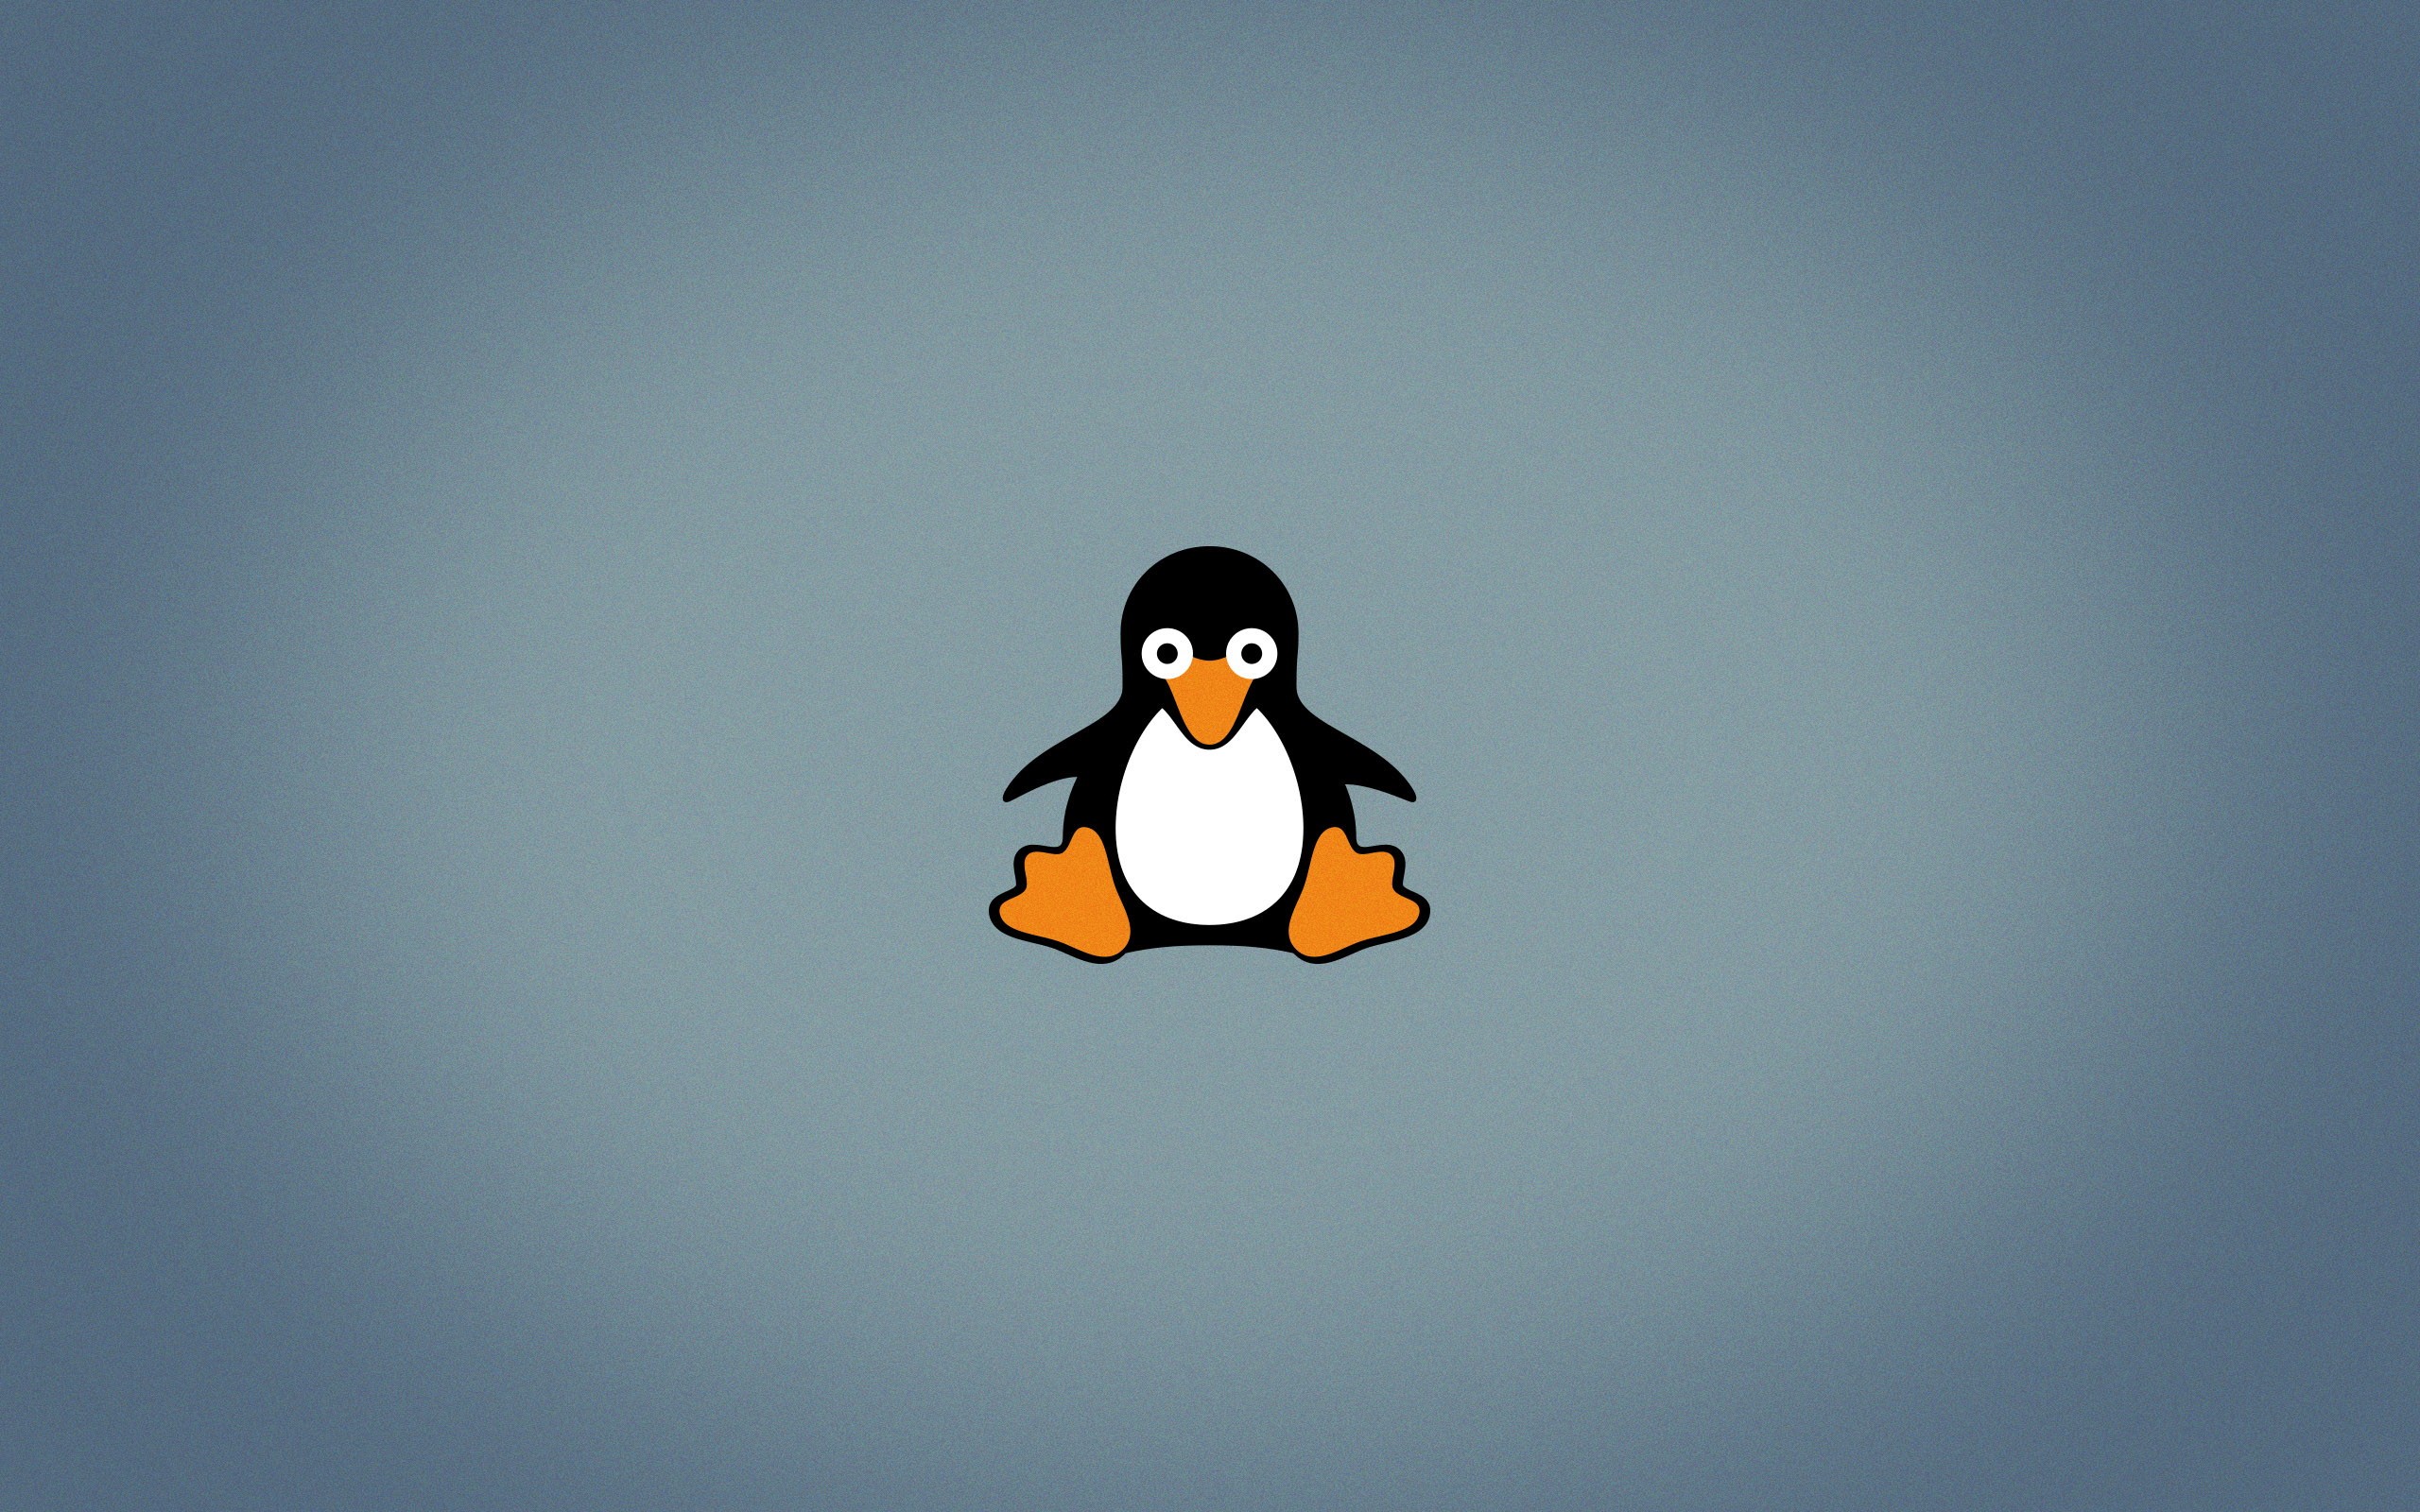 Wallpapers Linux logo penguins on the desktop